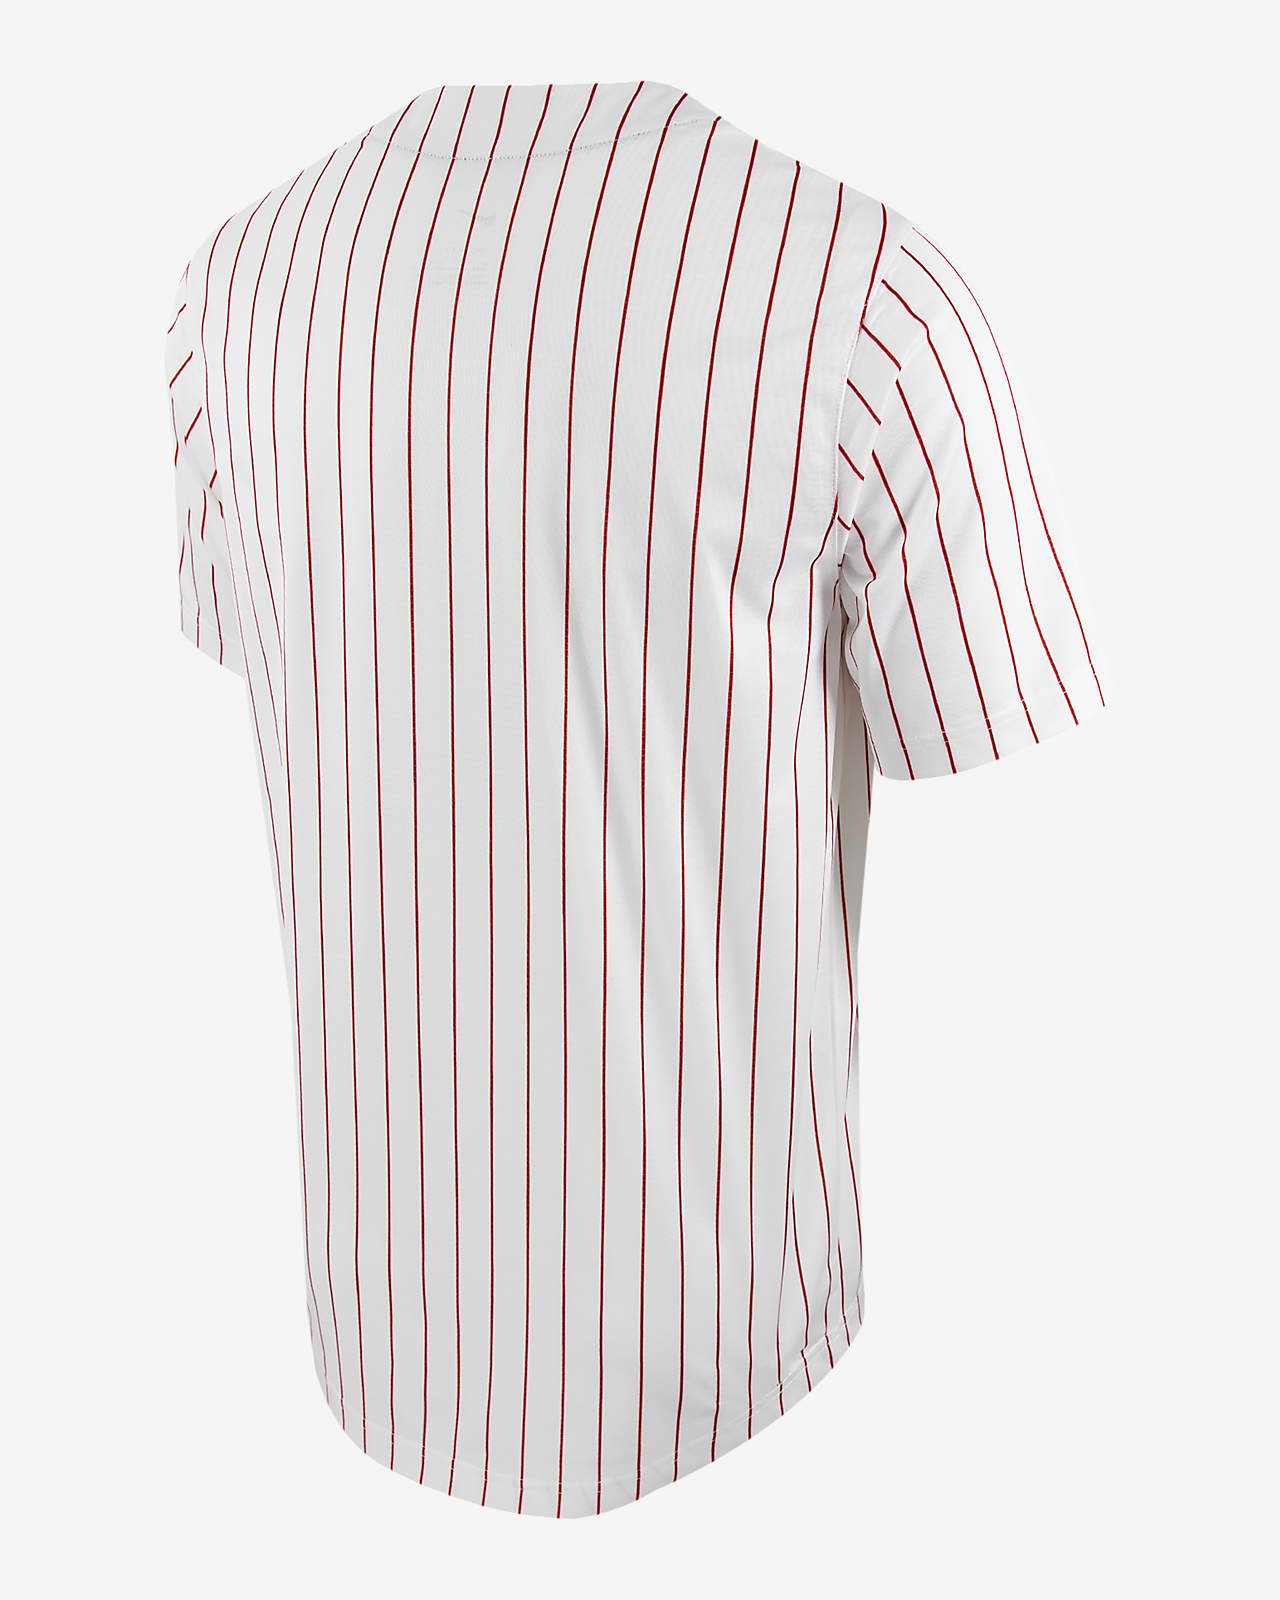 Augusta Sportswear Youth Pinstripe Full Button Baseball Jersey